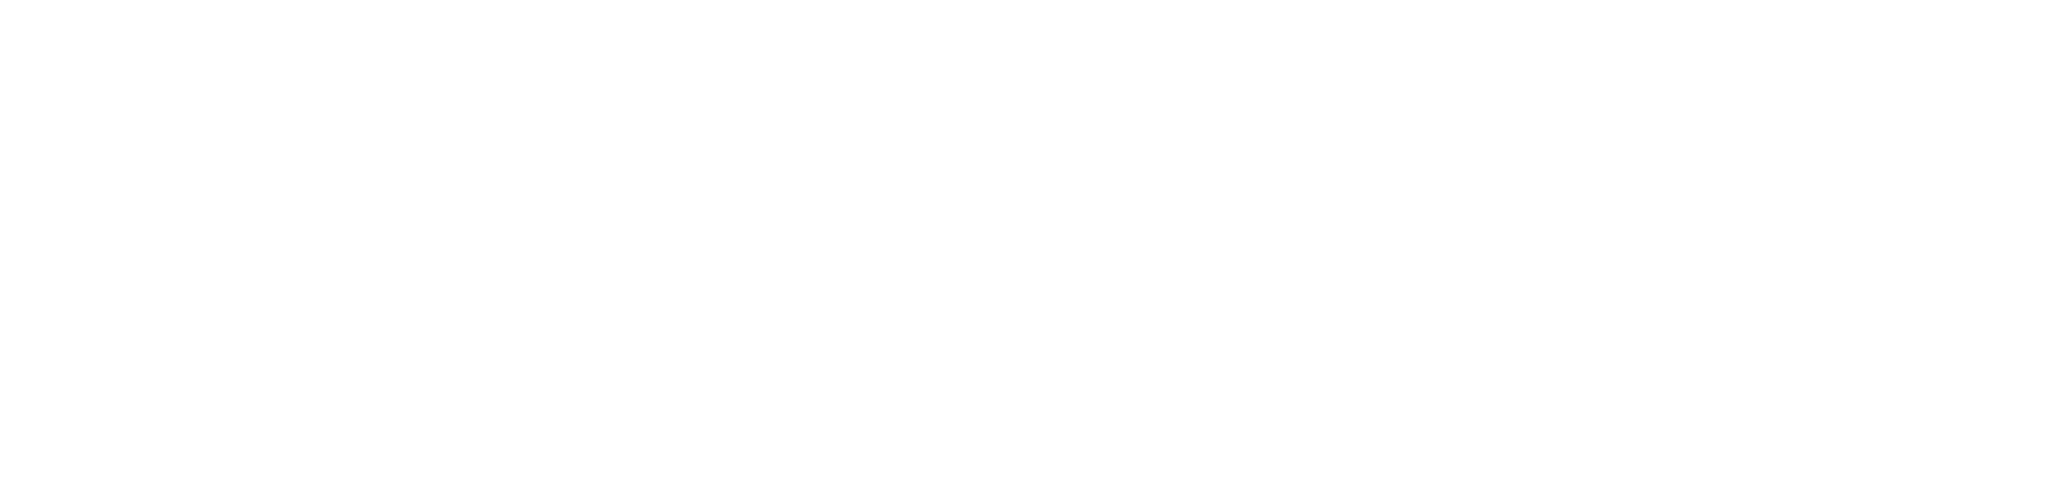 logo image for Tara Paul Photography